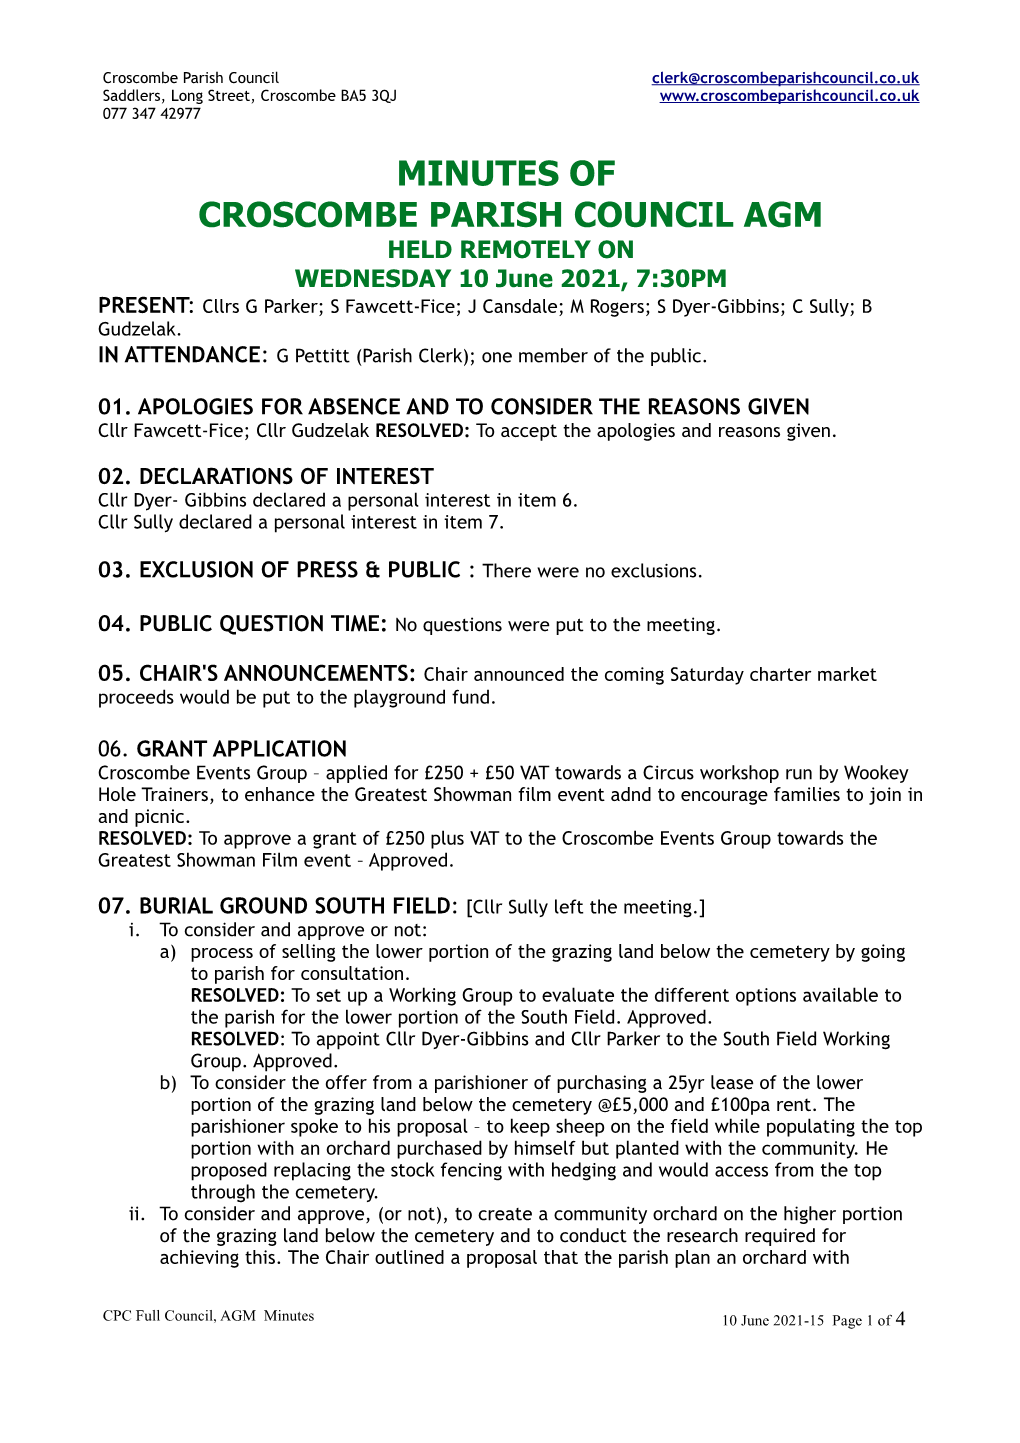 Minutes of Croscombe Parish Council